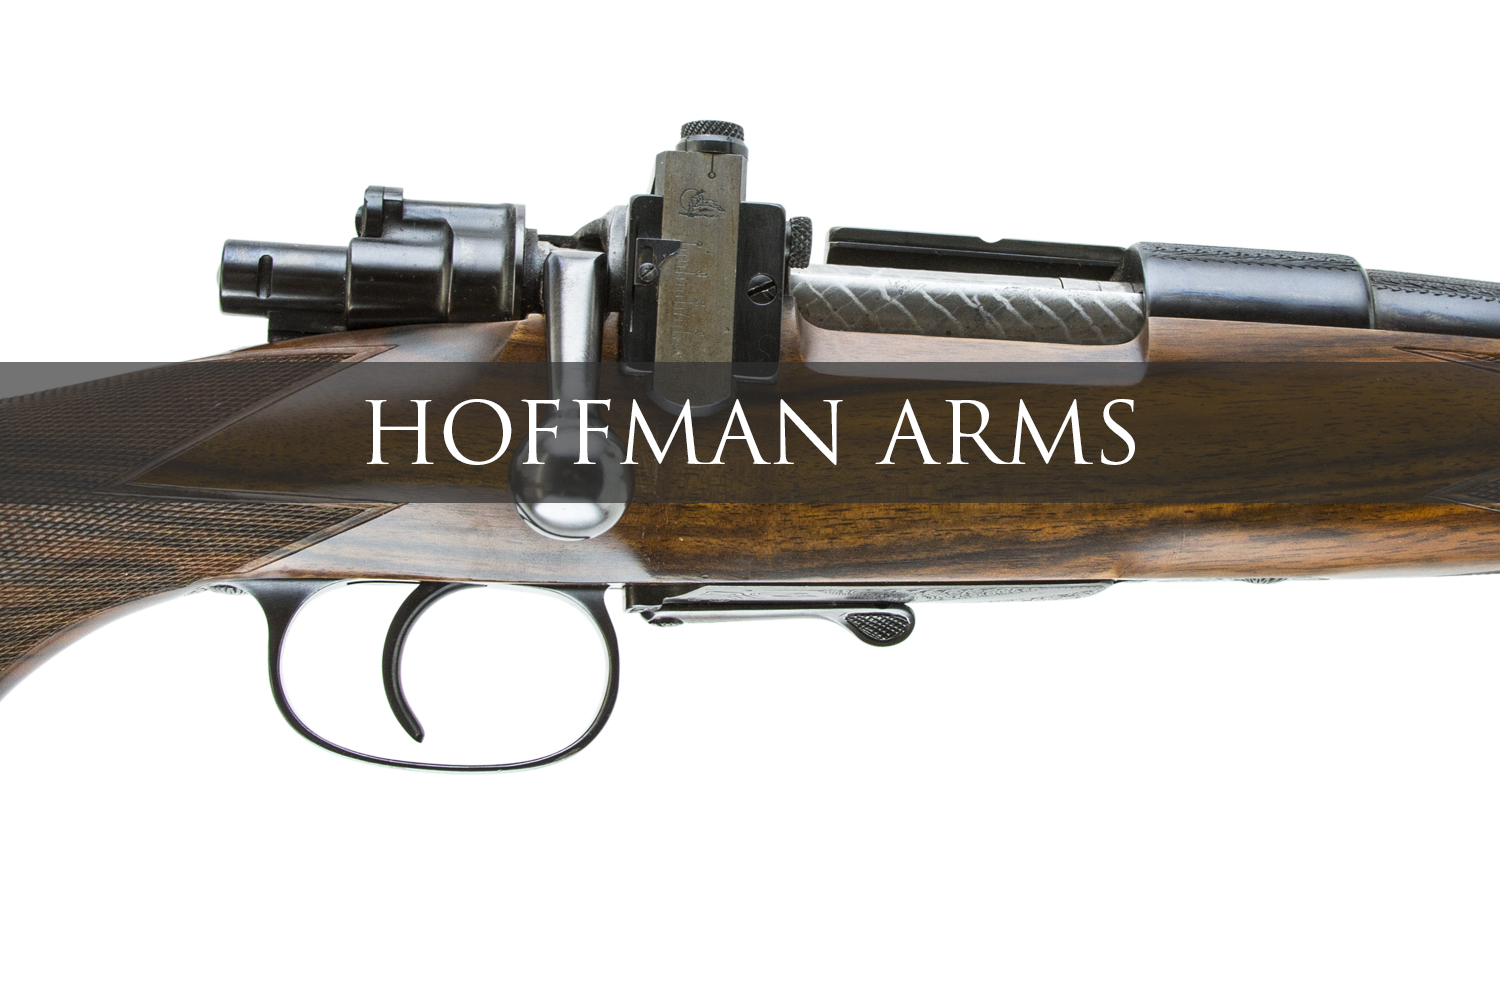 HOFFMAN ARMS RIFLE BANNER.jpg